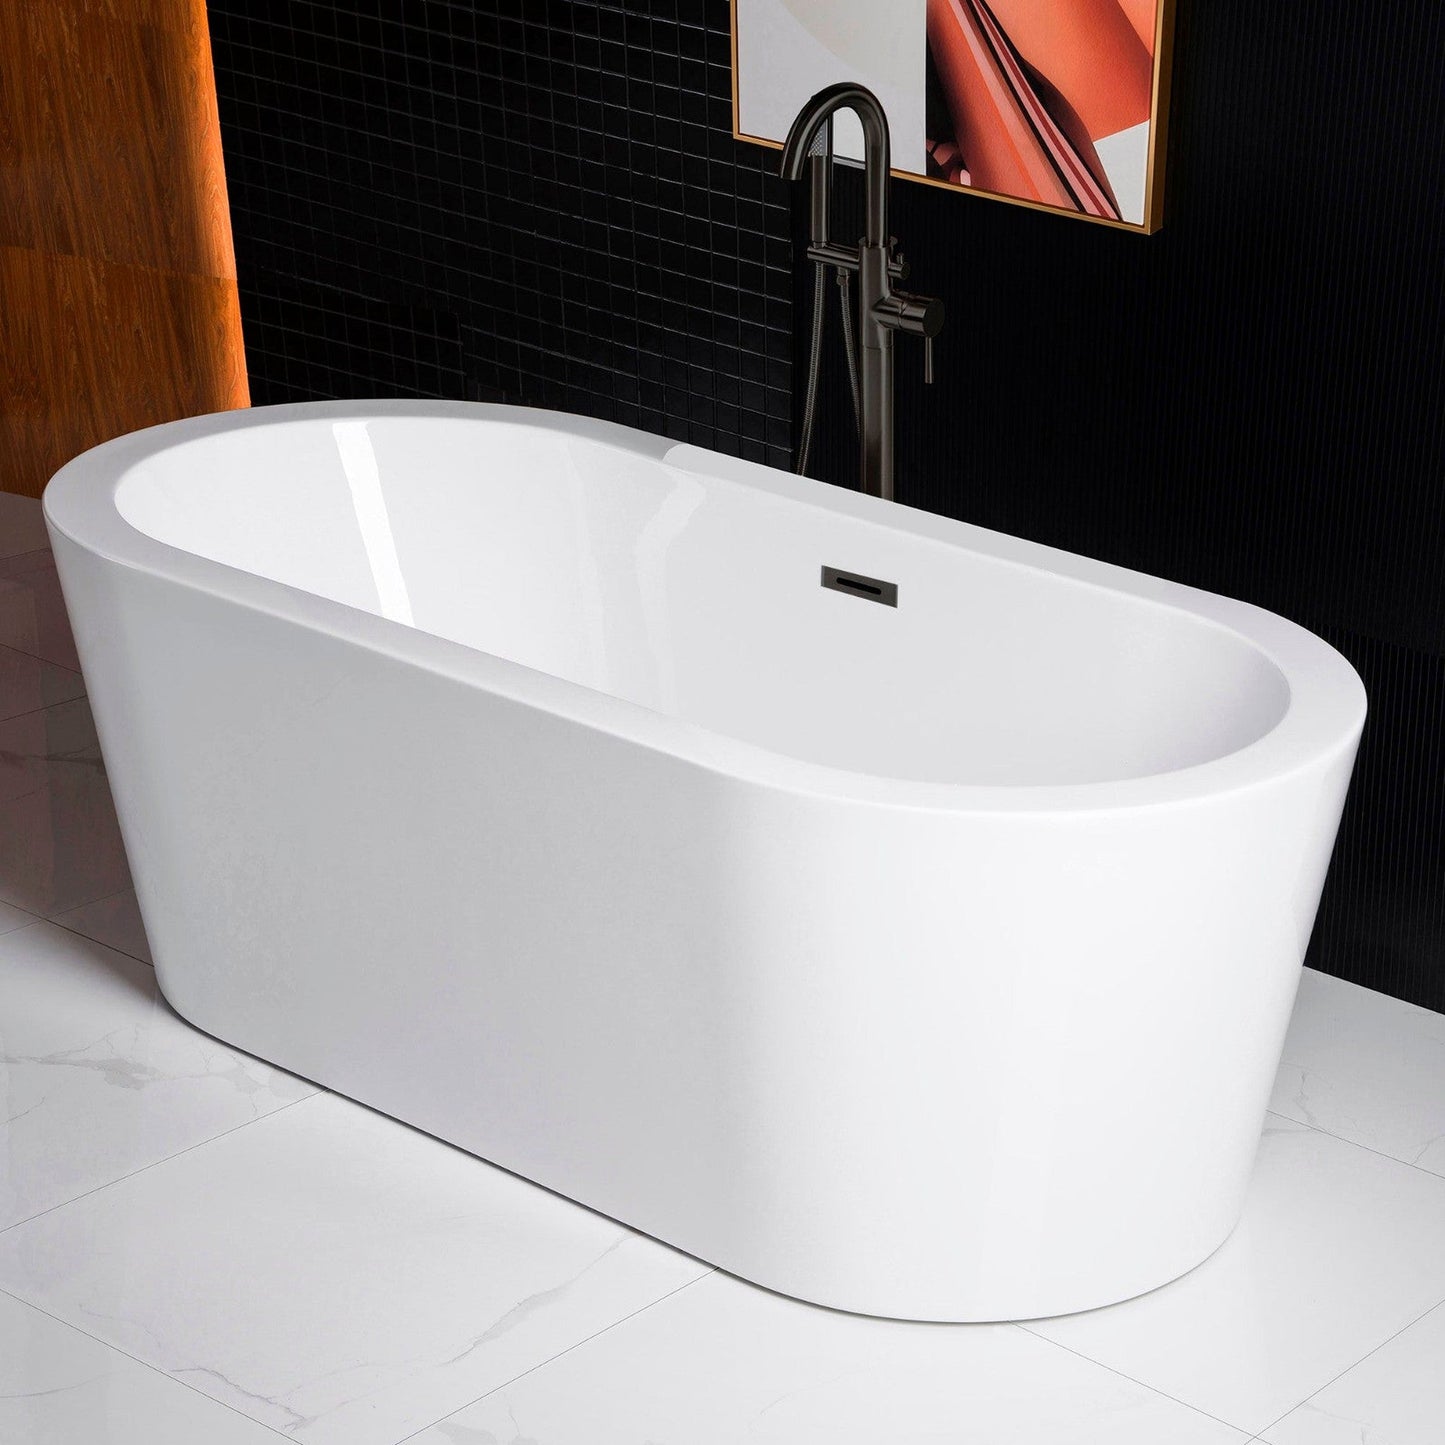 WoodBridge B0002 66" White Acrylic Freestanding Soaking Bathtub With Matte Black Drain, Overflow, F0072MBVT Tub Filler and Caddy Tray